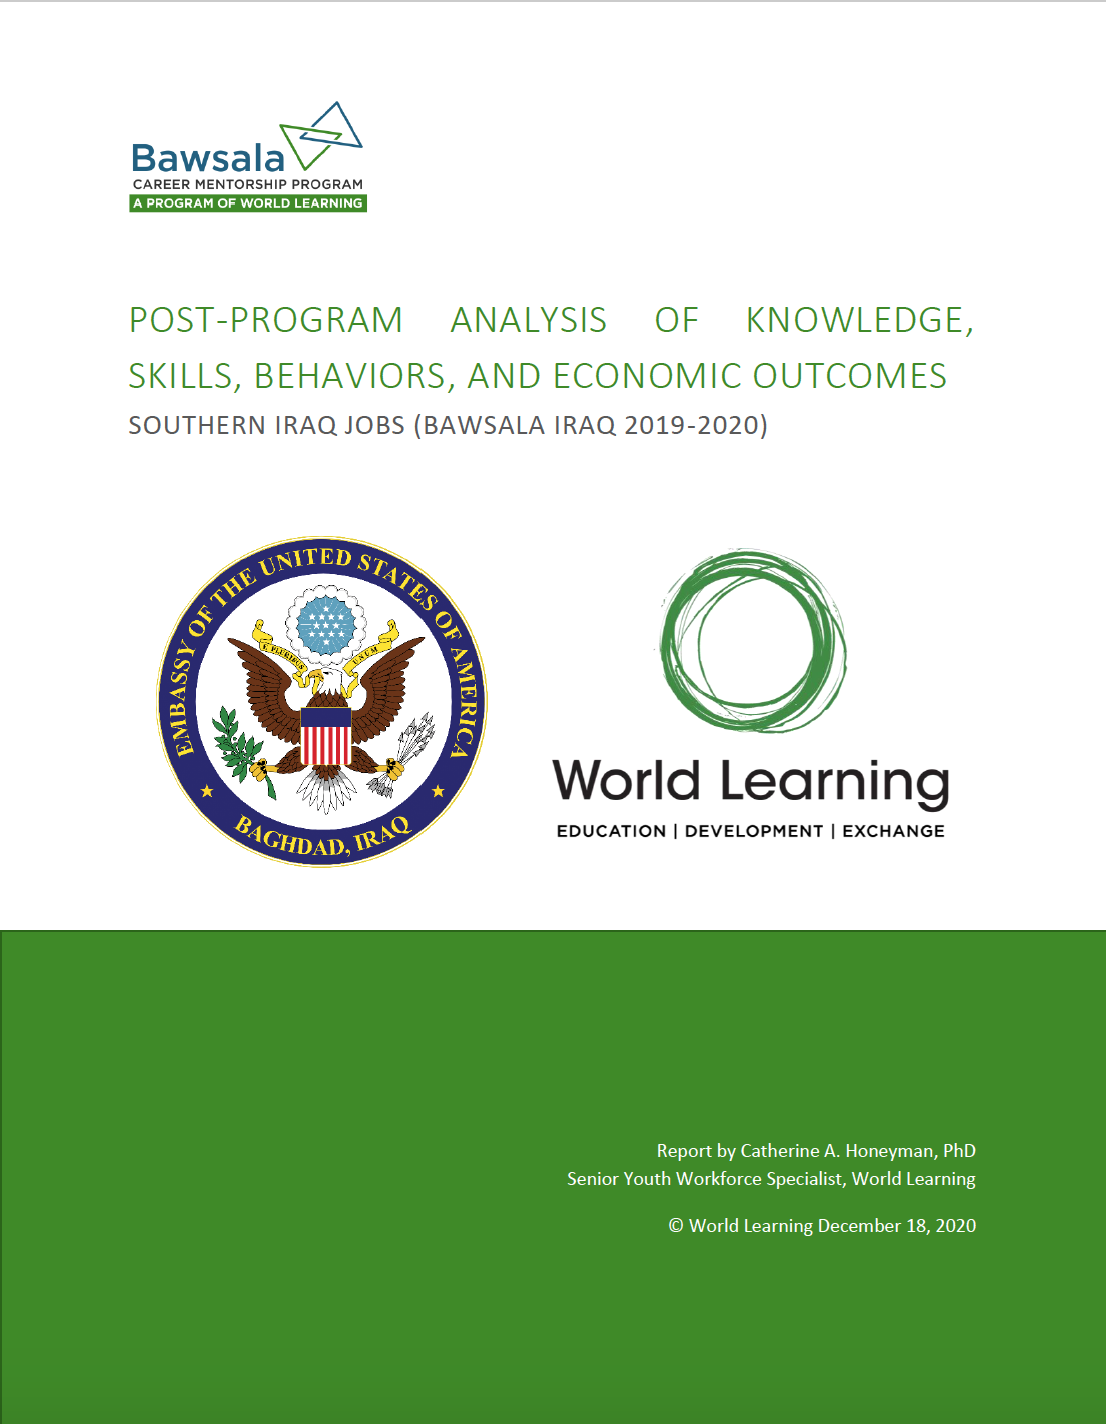 Bawsala Post-Program Analysis of Knowledge, Skills, Behaviors, Economic Outcomes